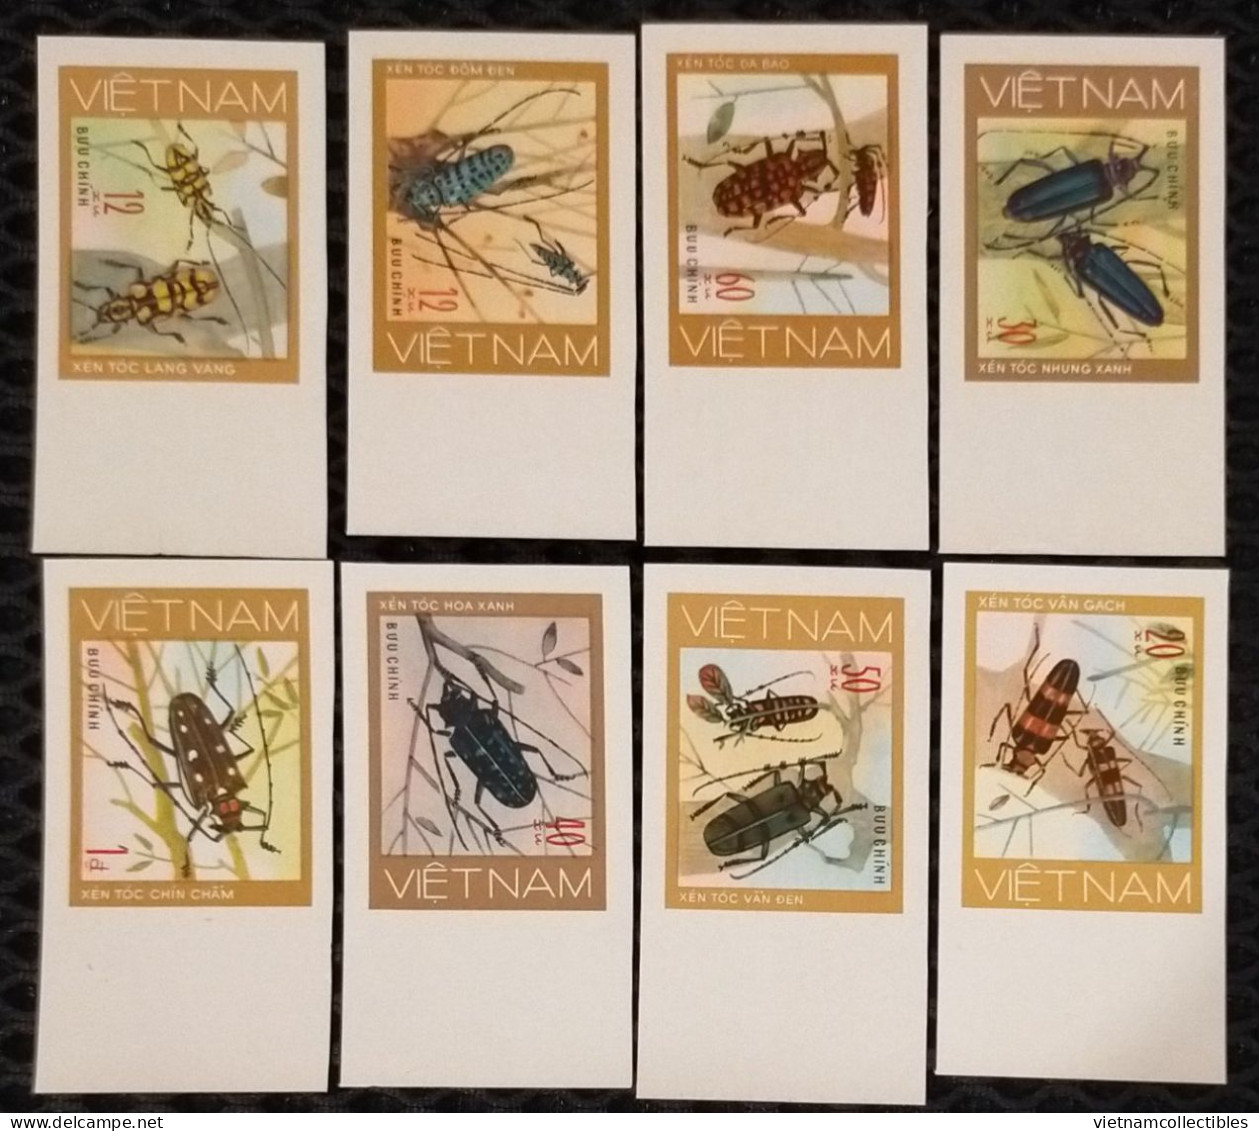 Vietnam Viet Nam MNH Imperf Stamps 1977 : Capricornbeetles / Insect / Beetle (Ms324) - Vietnam